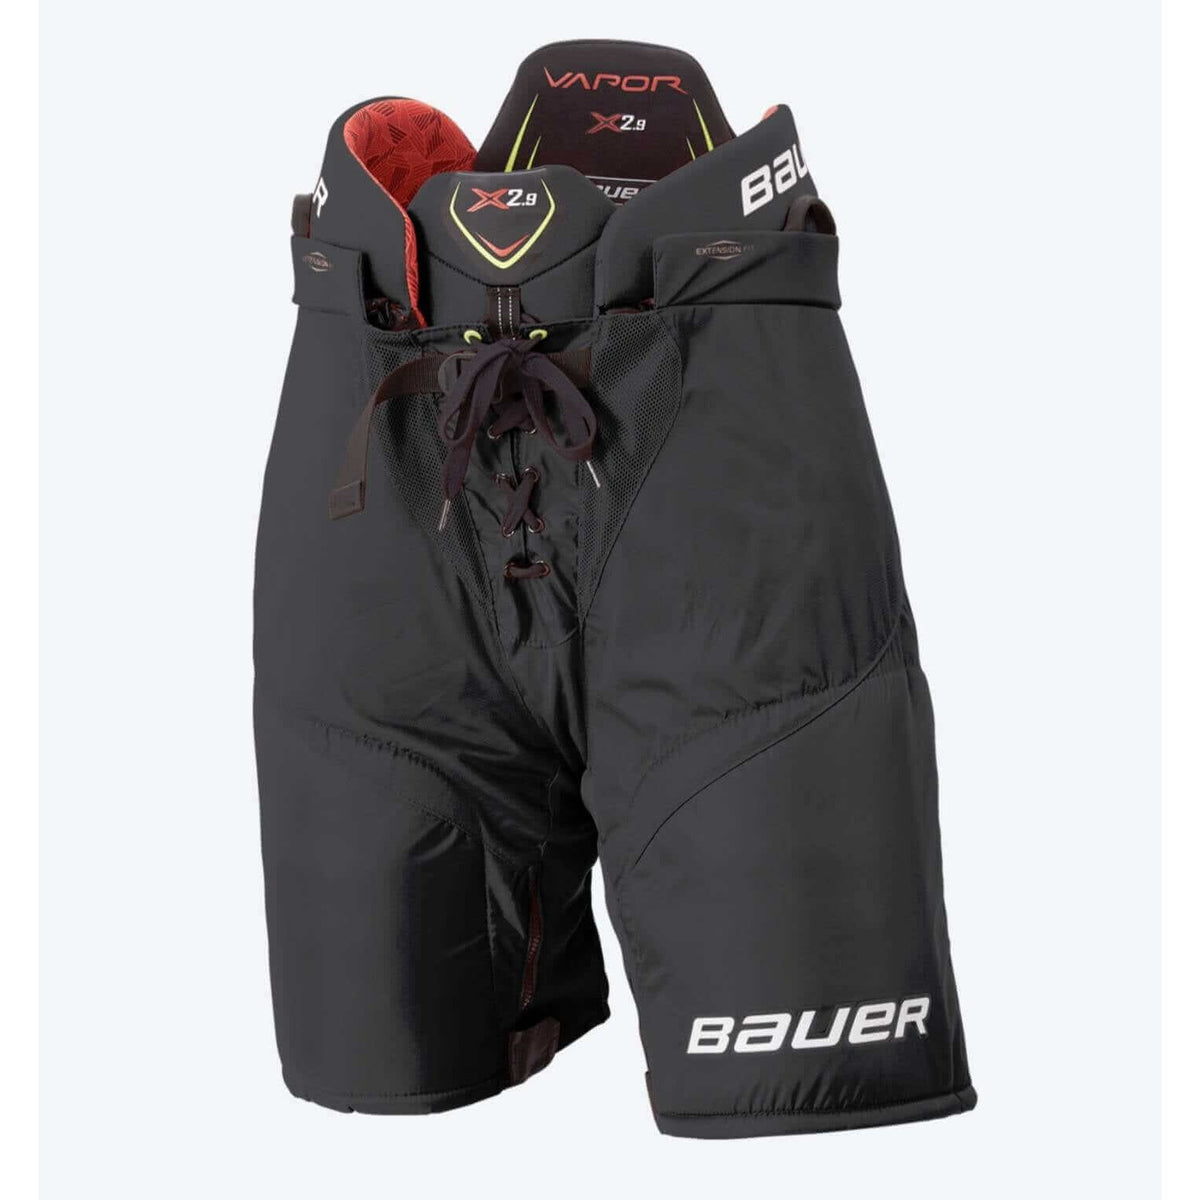 Bauer S20 Vapor X2.9 Ice Hockey Shorts Jr